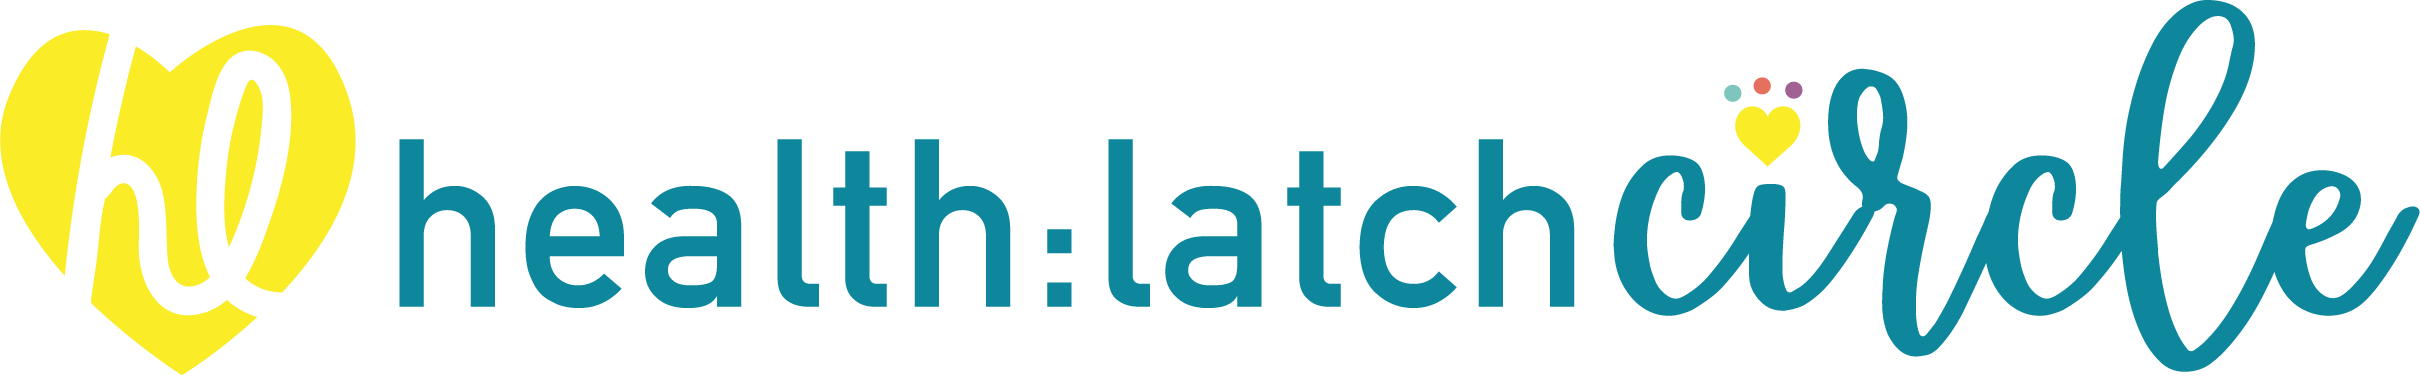 health-latch-circle-logo.png